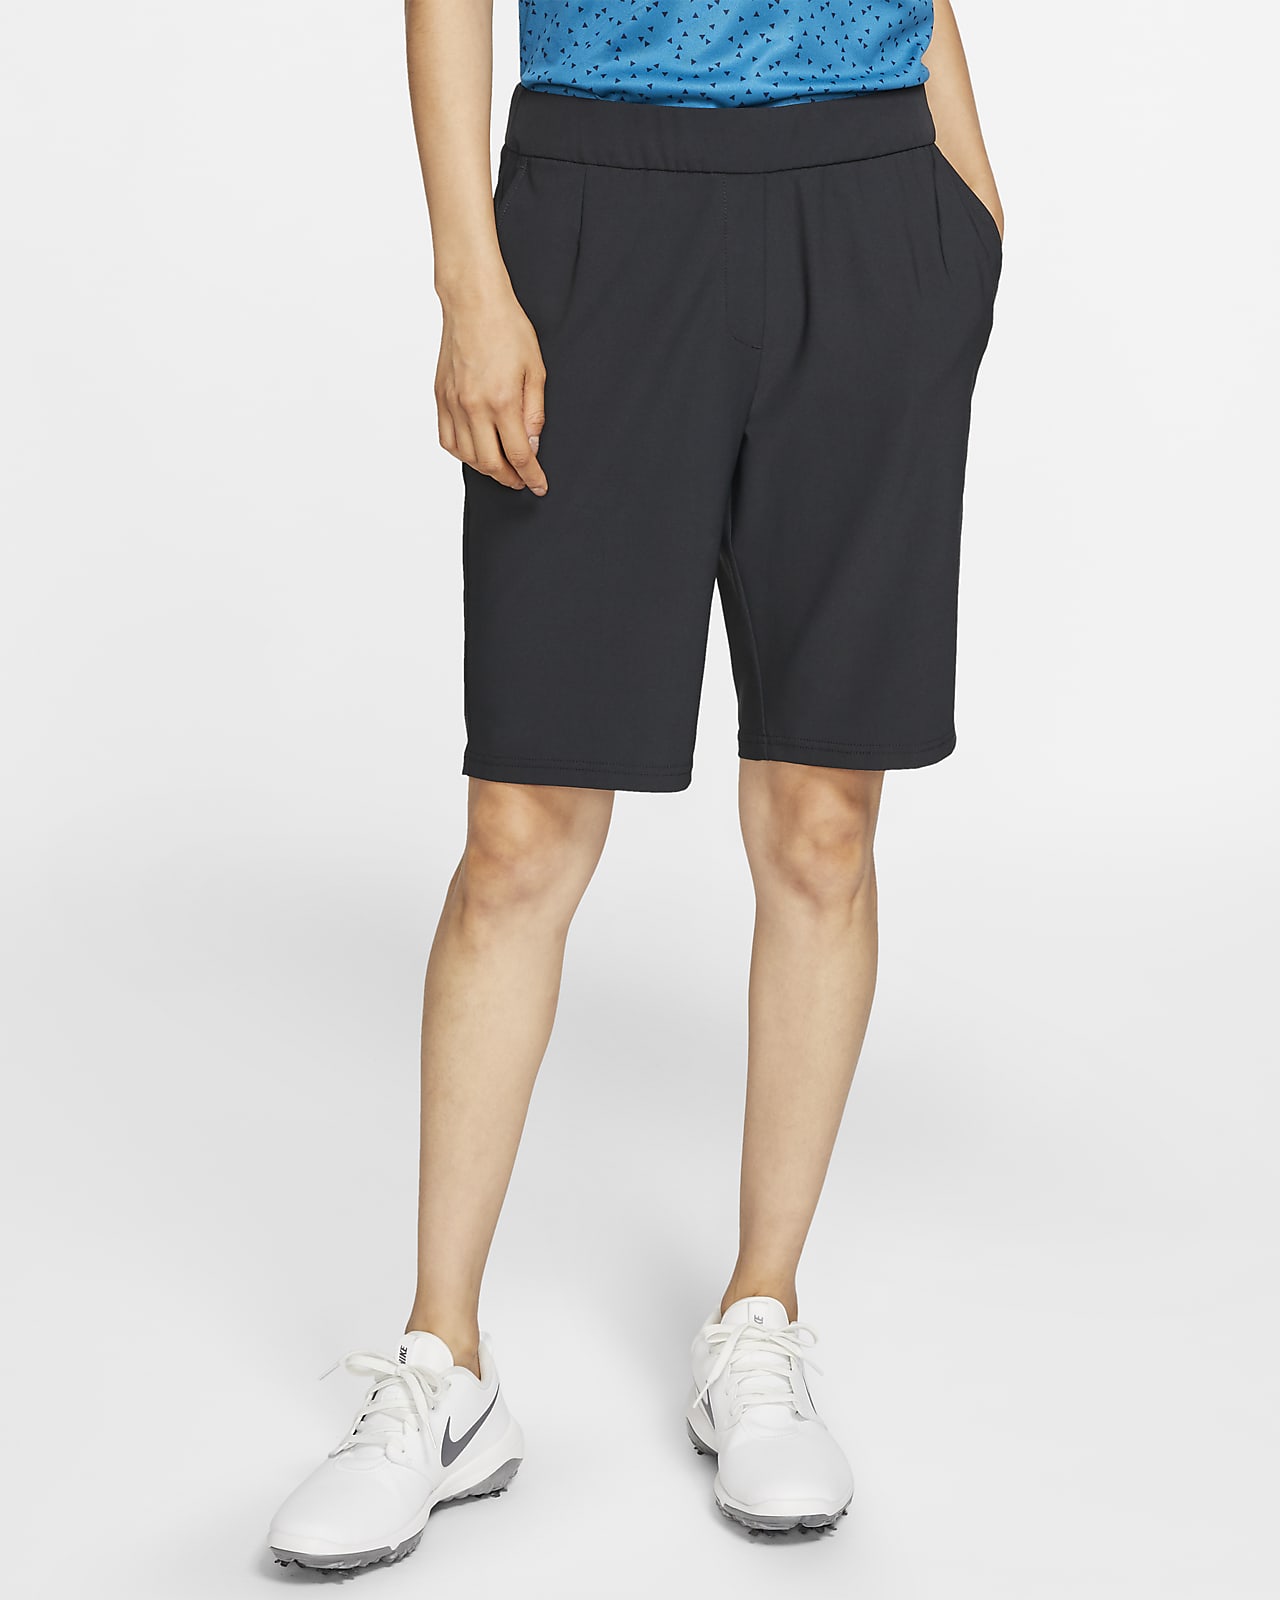 Womens Nike Flex Golf Shorts Online 